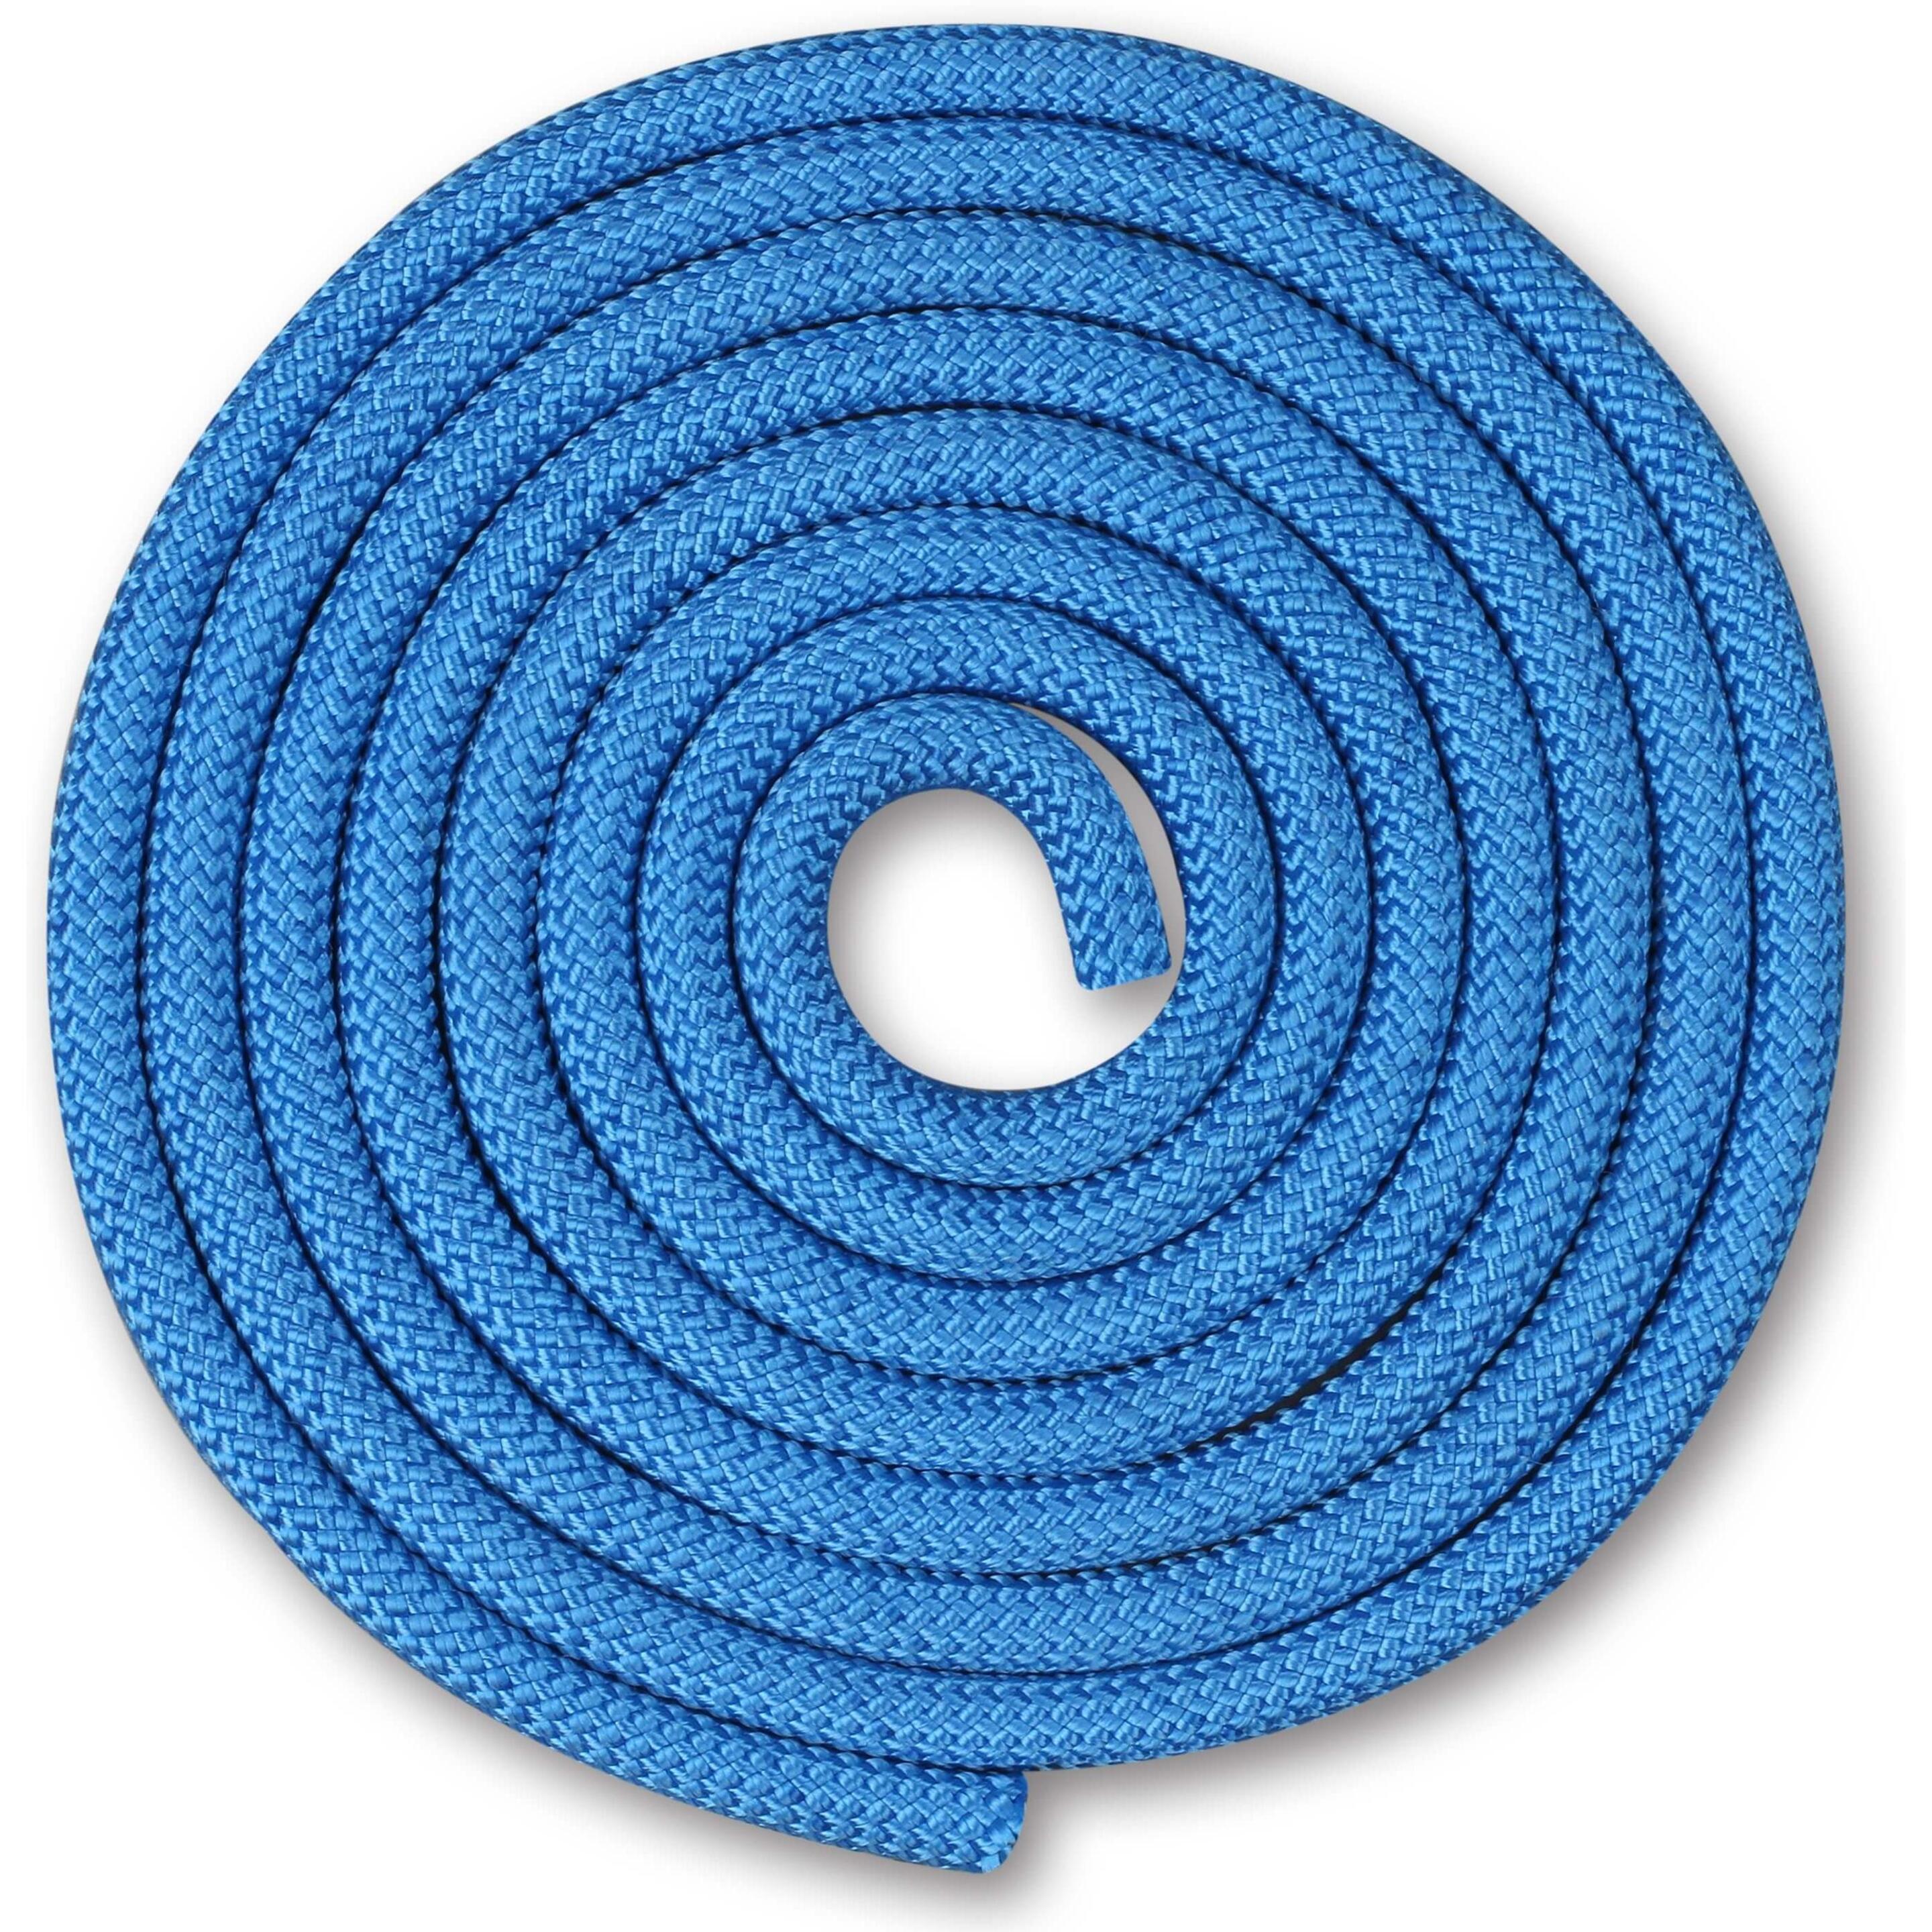 Cuerda Para Gimnasia Rítmica Ponderada 150g Indigo 2,5 M - Azul  MKP